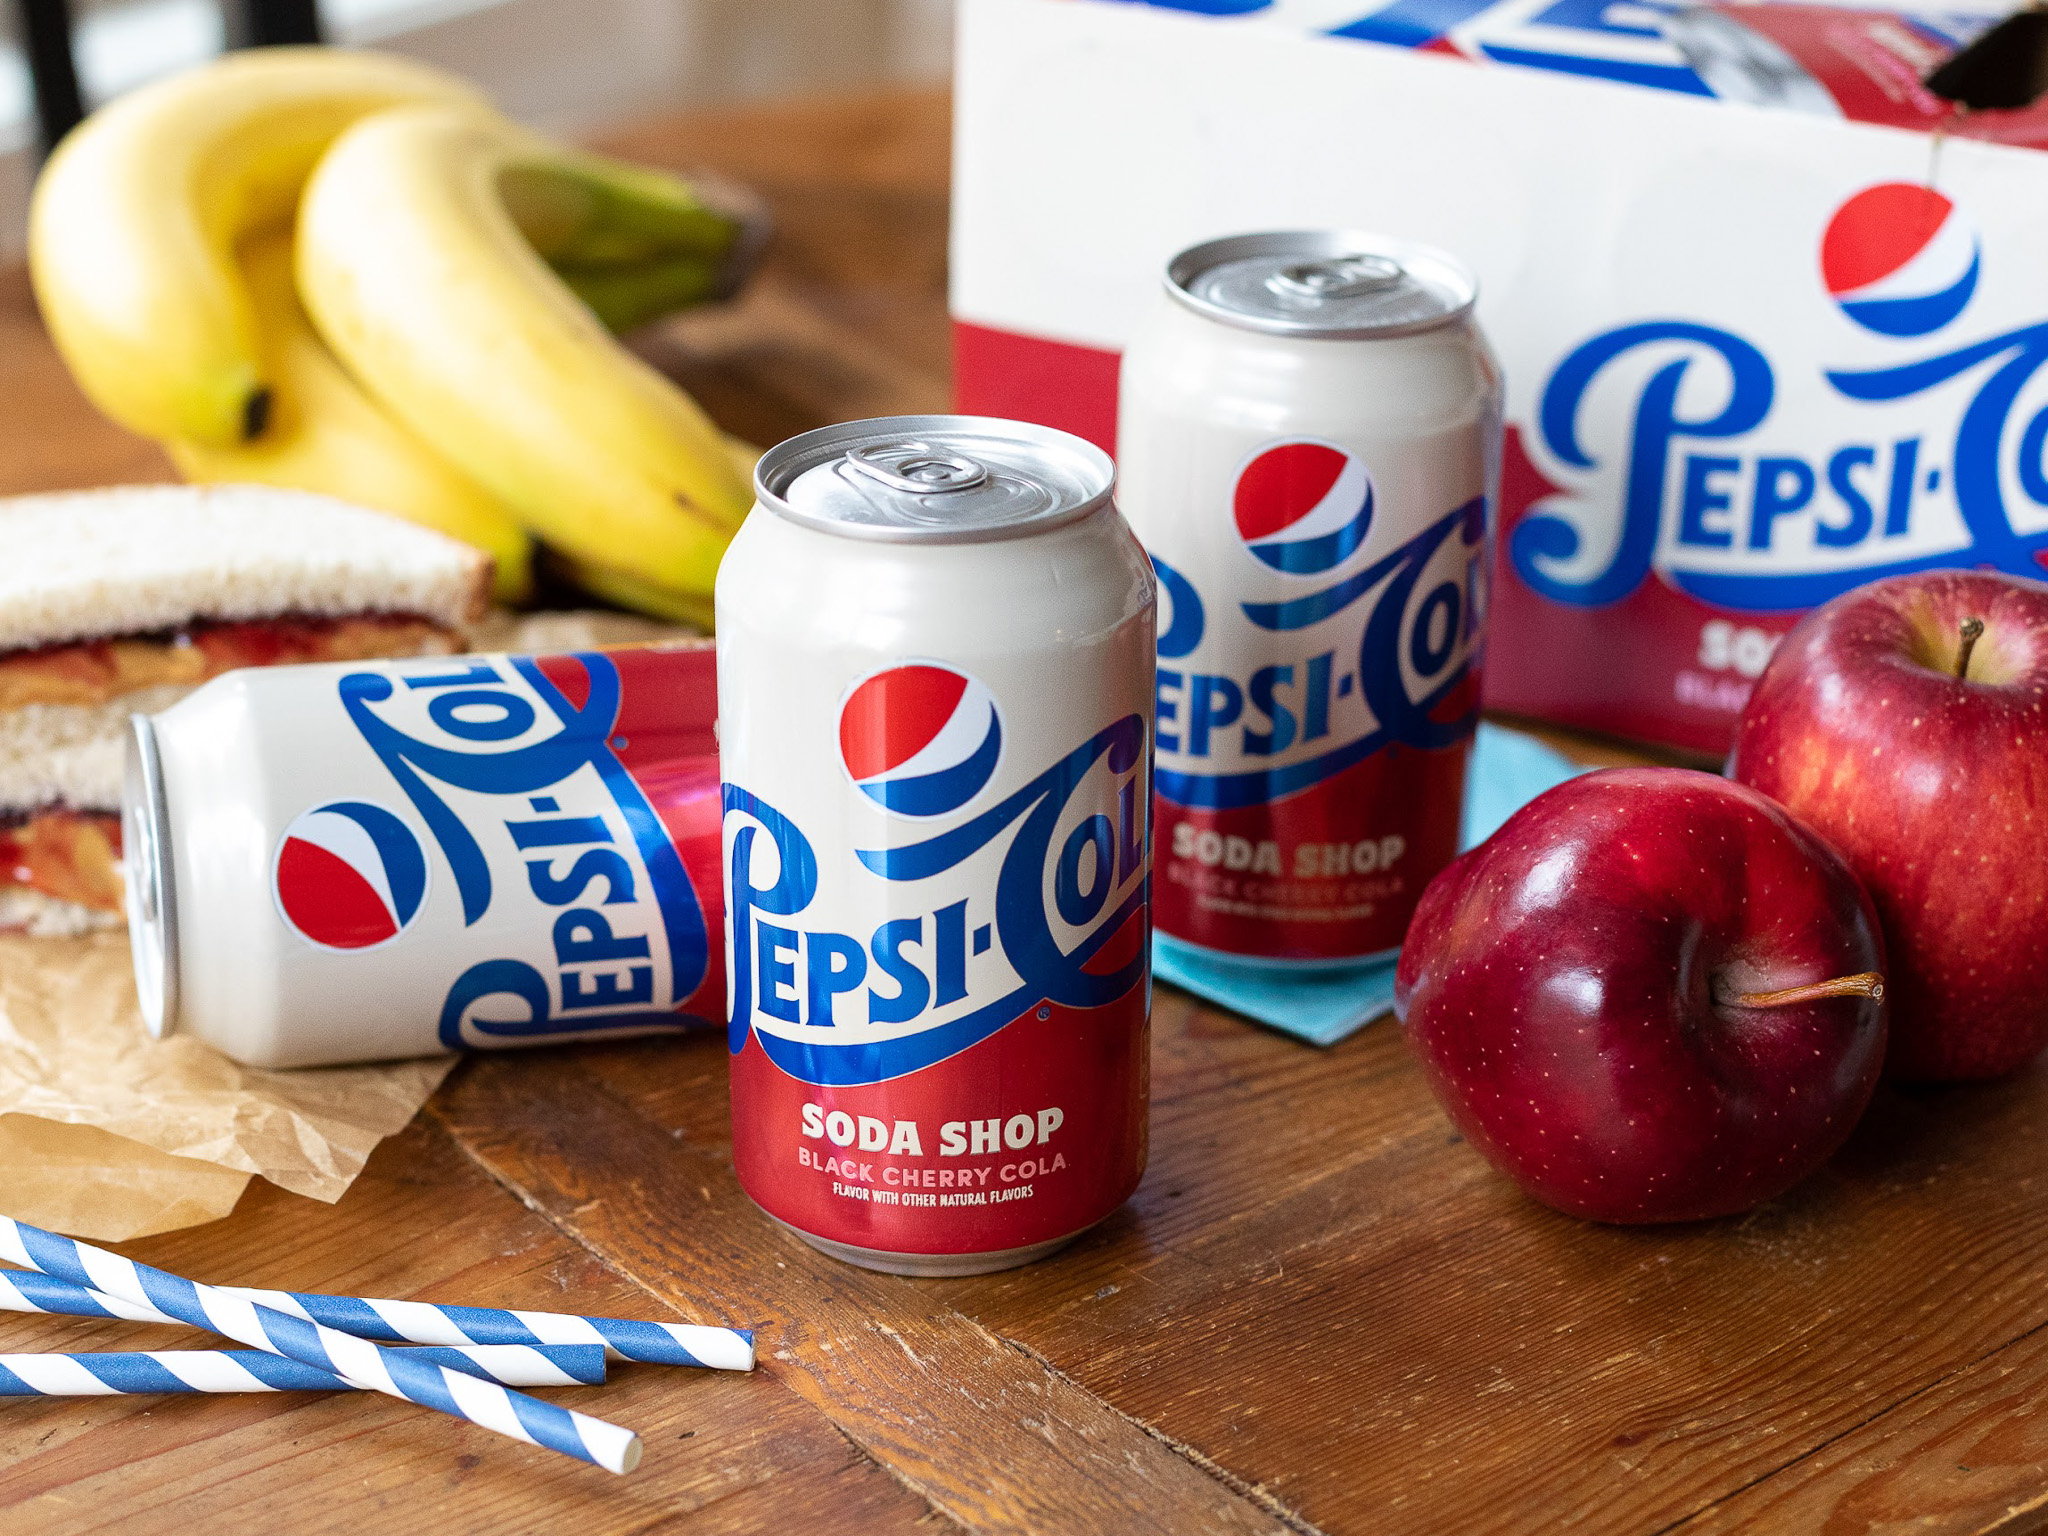 Get Pepsi Soda Shop 12-Packs For Just $3.96 At Publix (Regular Price $8.19)